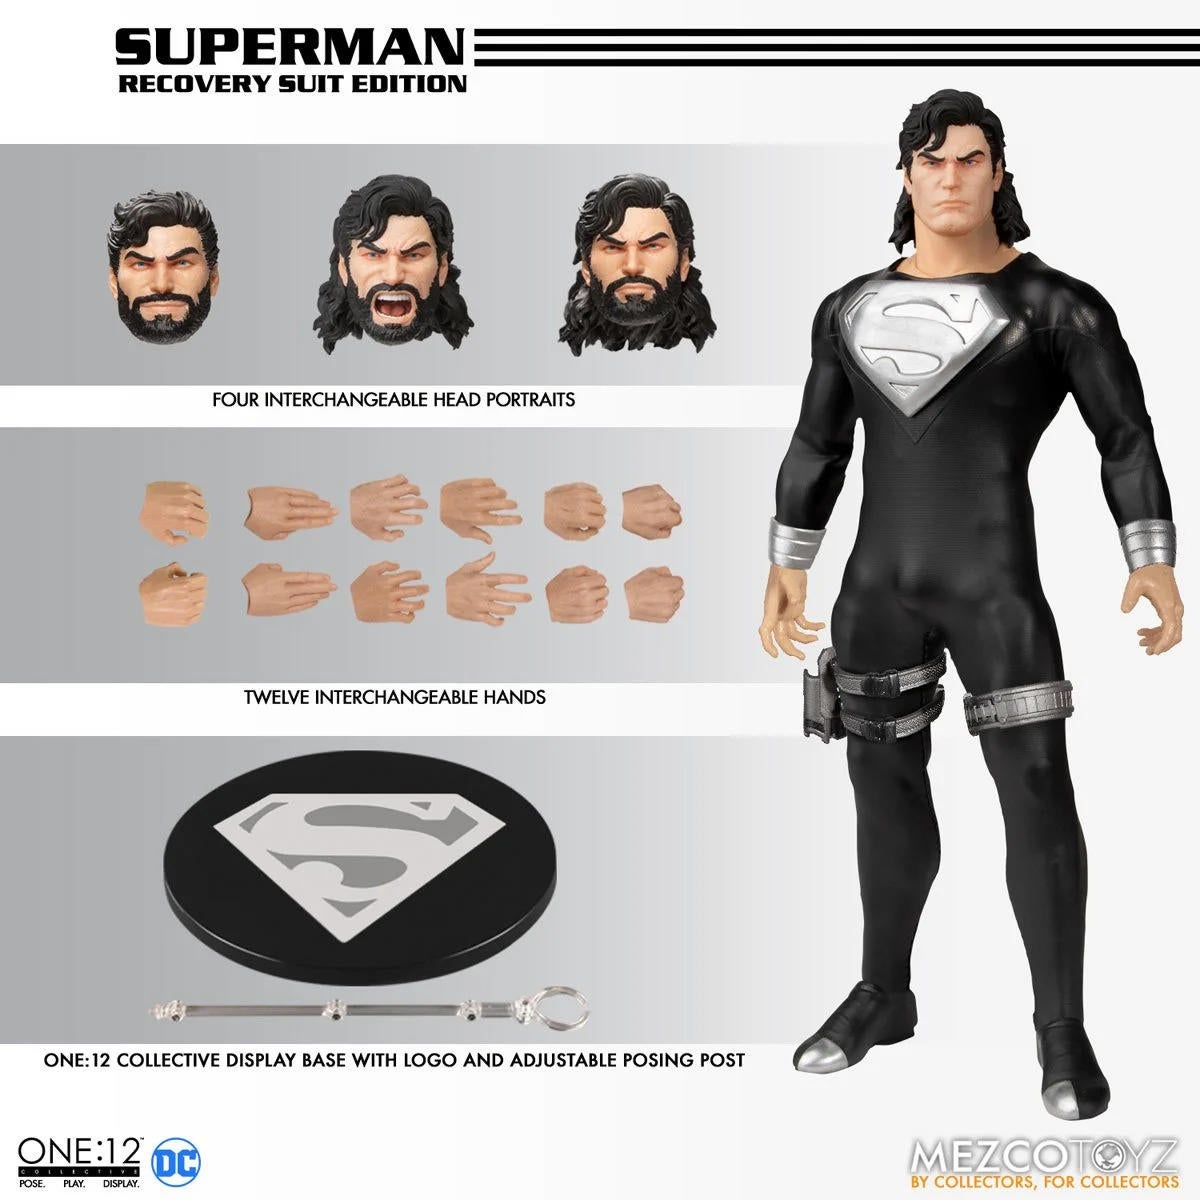 mezco-recovery-suit-superman-2.jpg